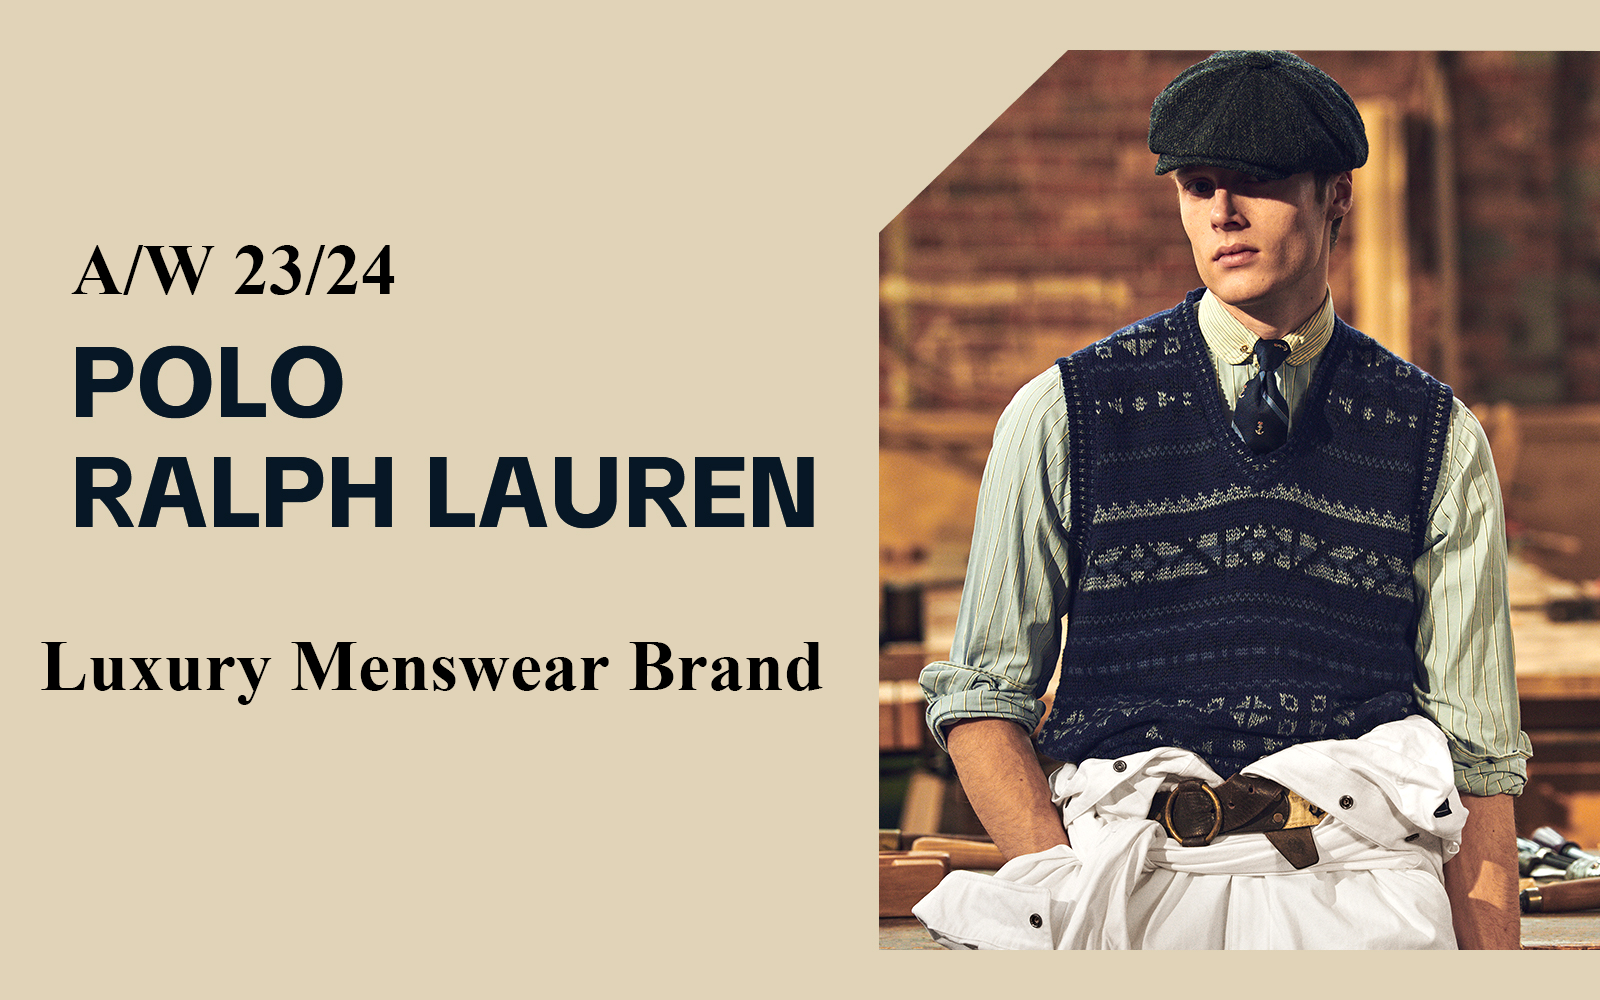 The Analysis of Polo Ralph Lauren The Luxury Menswear Brand